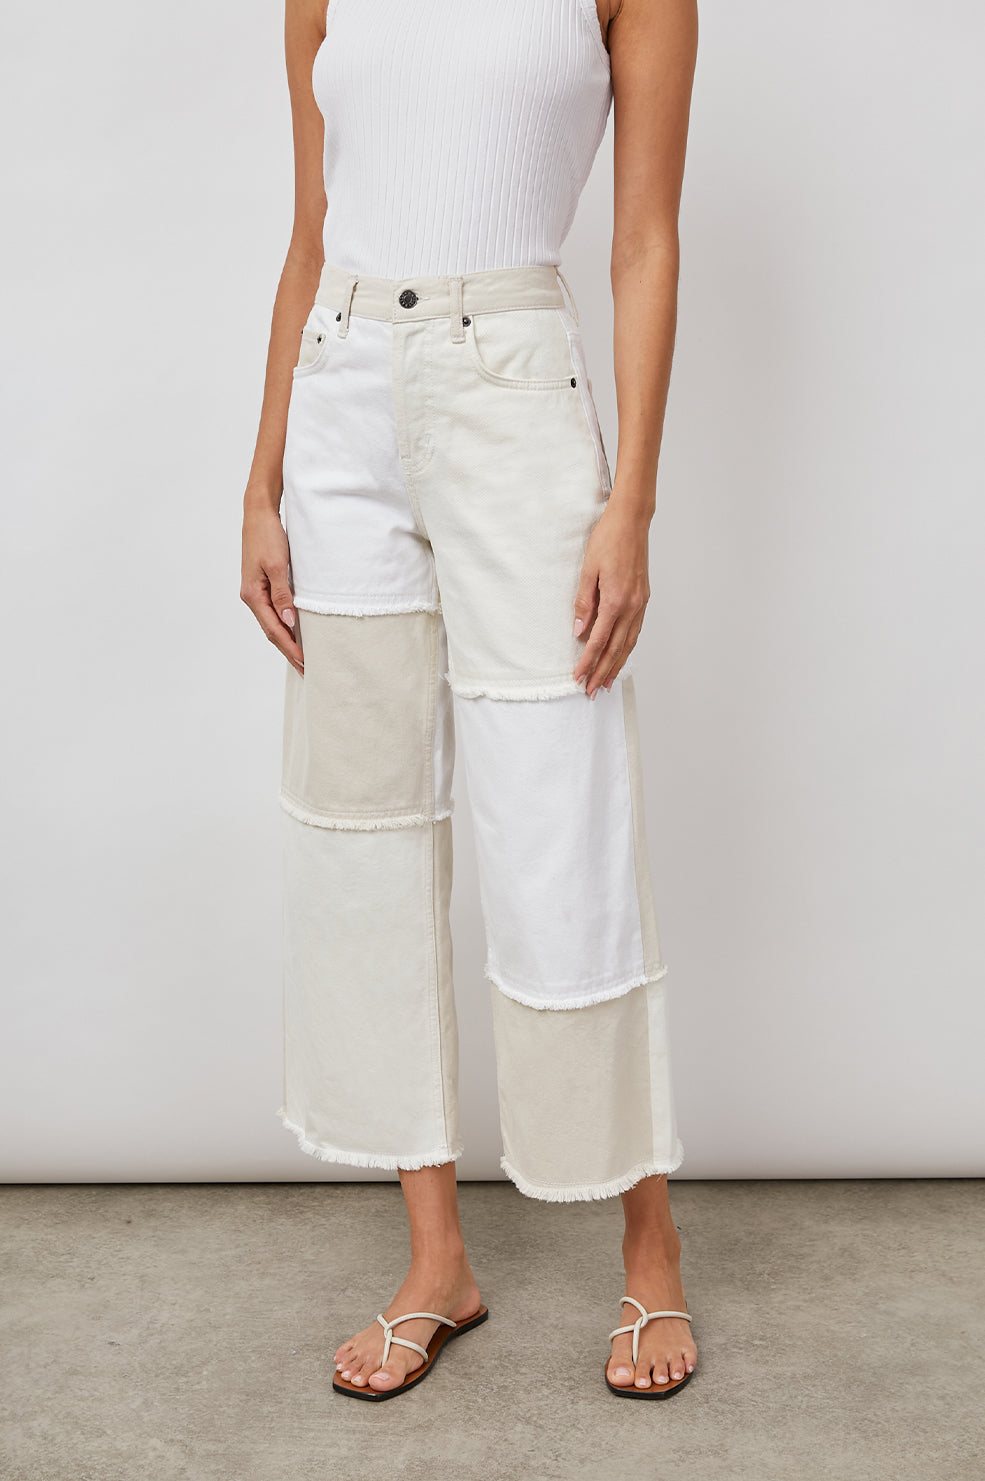 Off-White Patchwork Denim Jeans